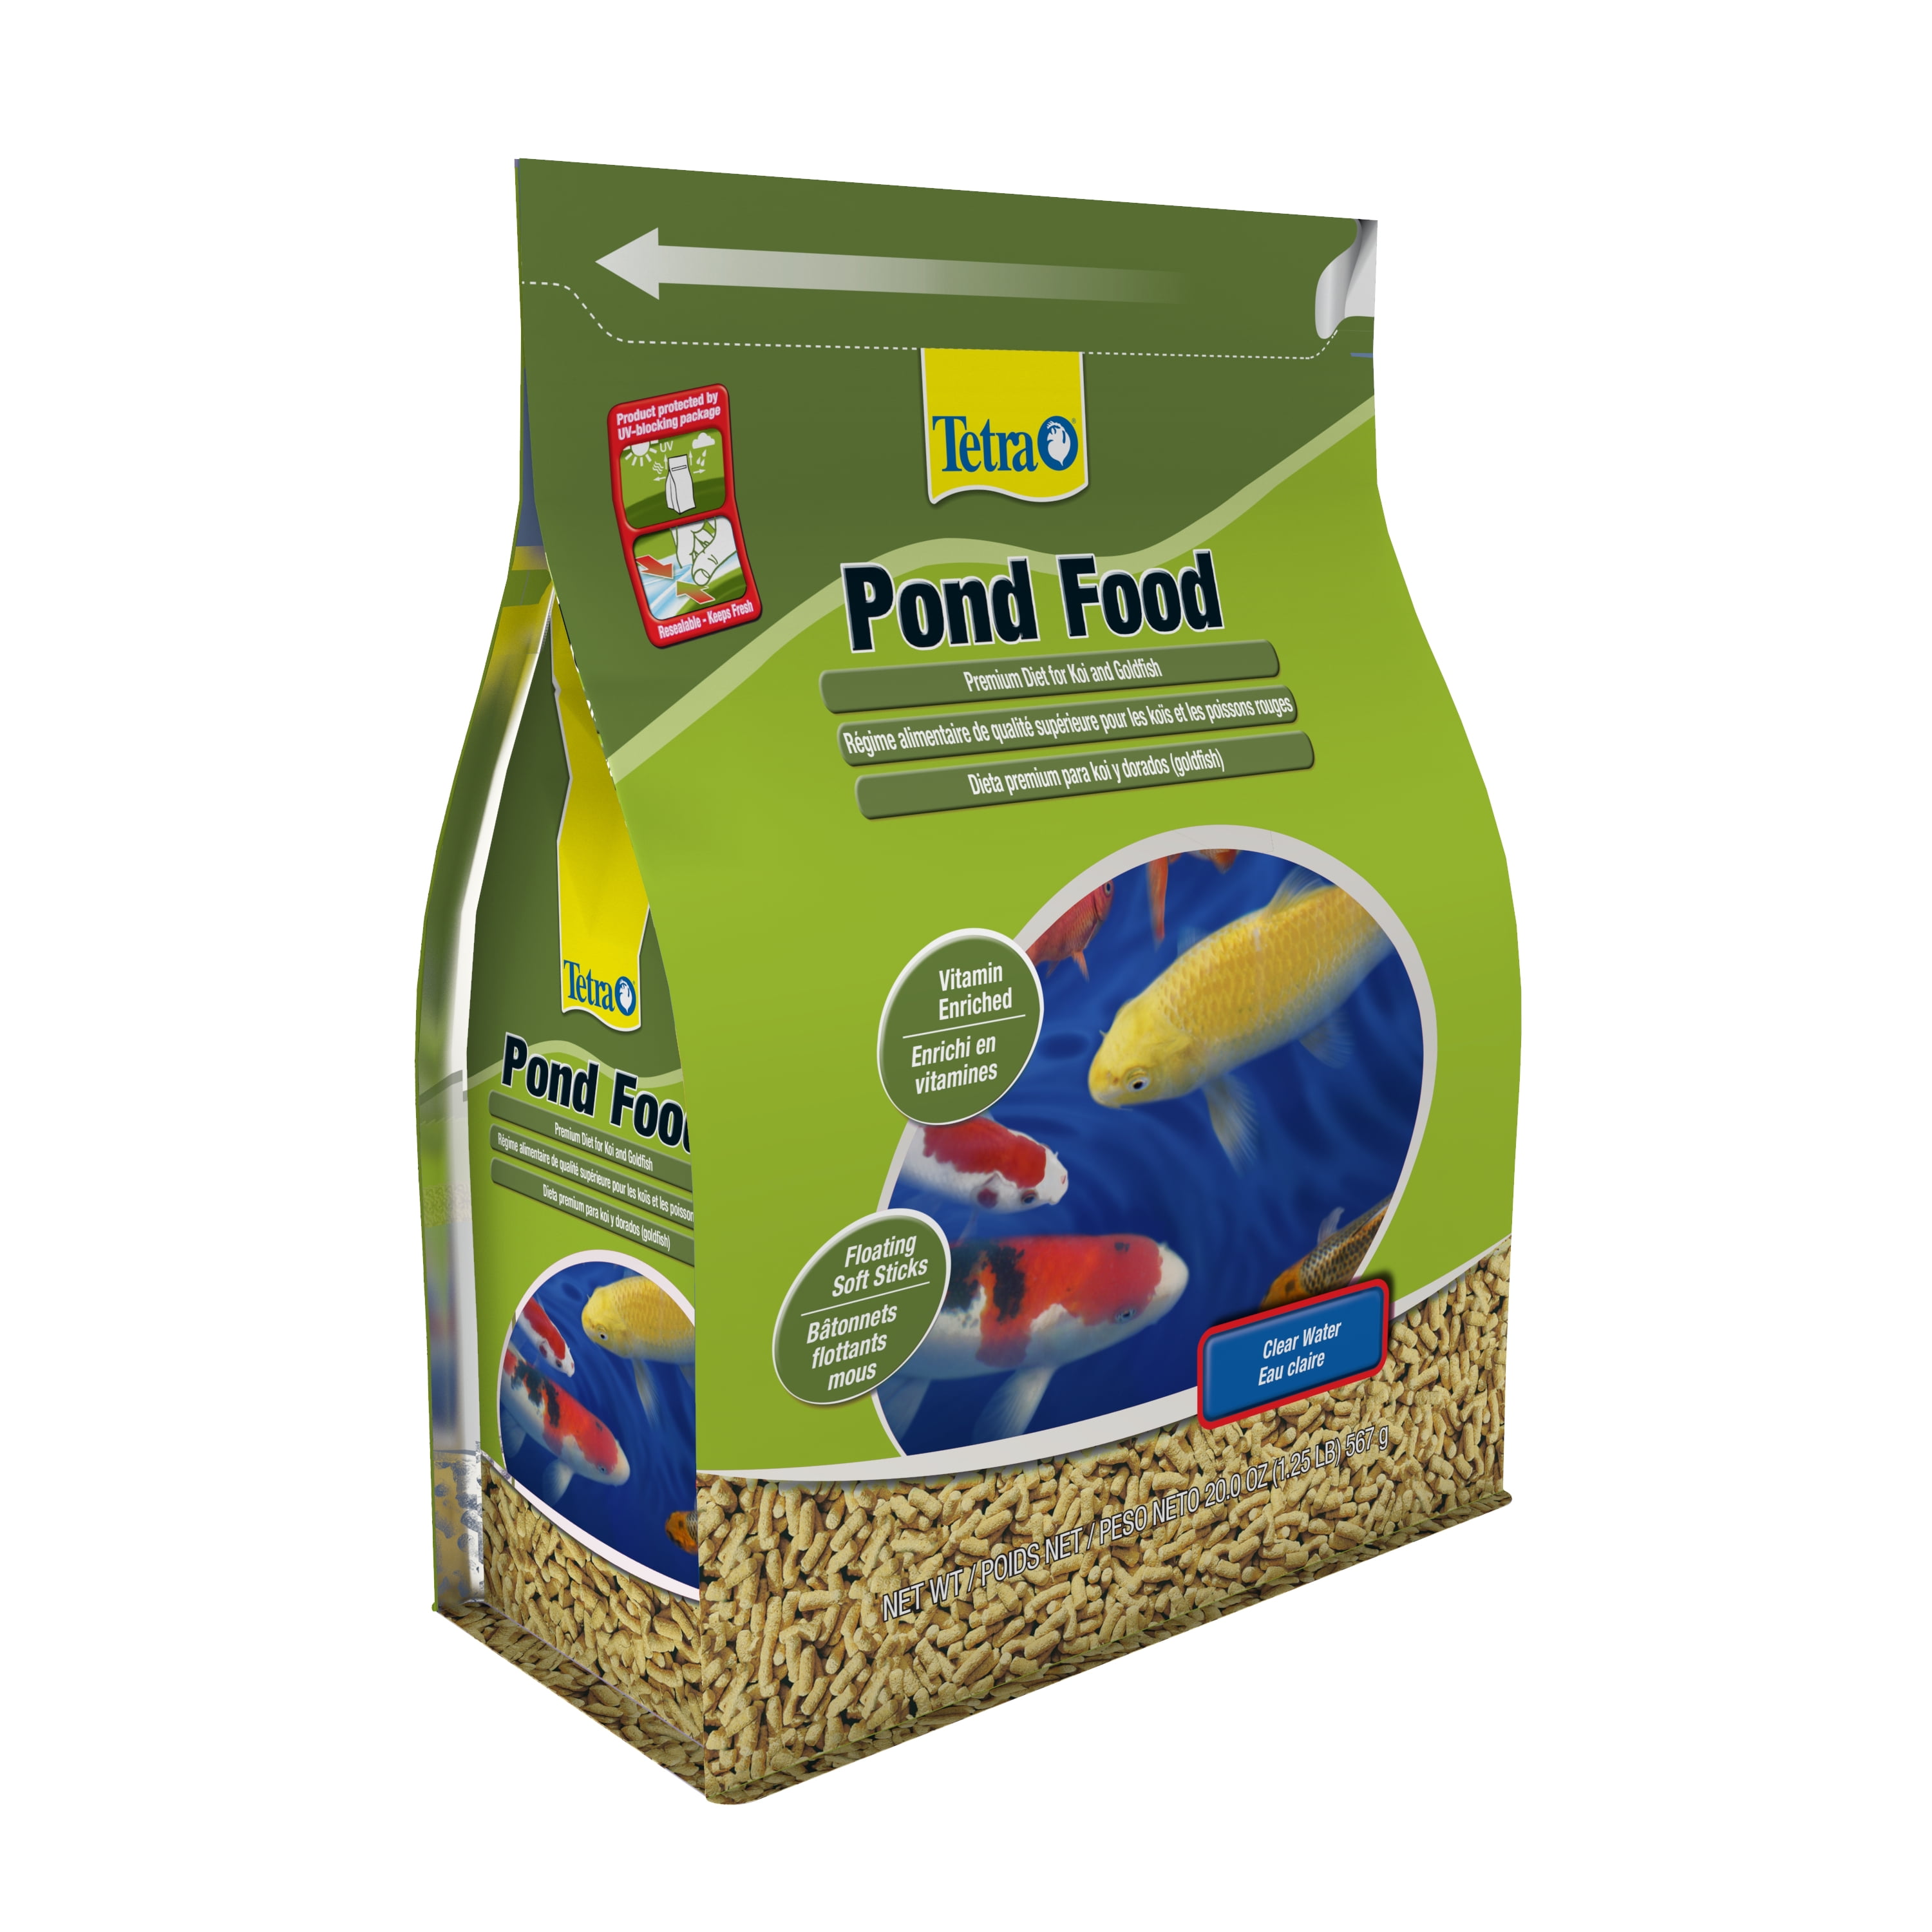 Tetra Pond Fish Food Premium Sticks Diet for Koi and Goldfish, 1.25 lbs 